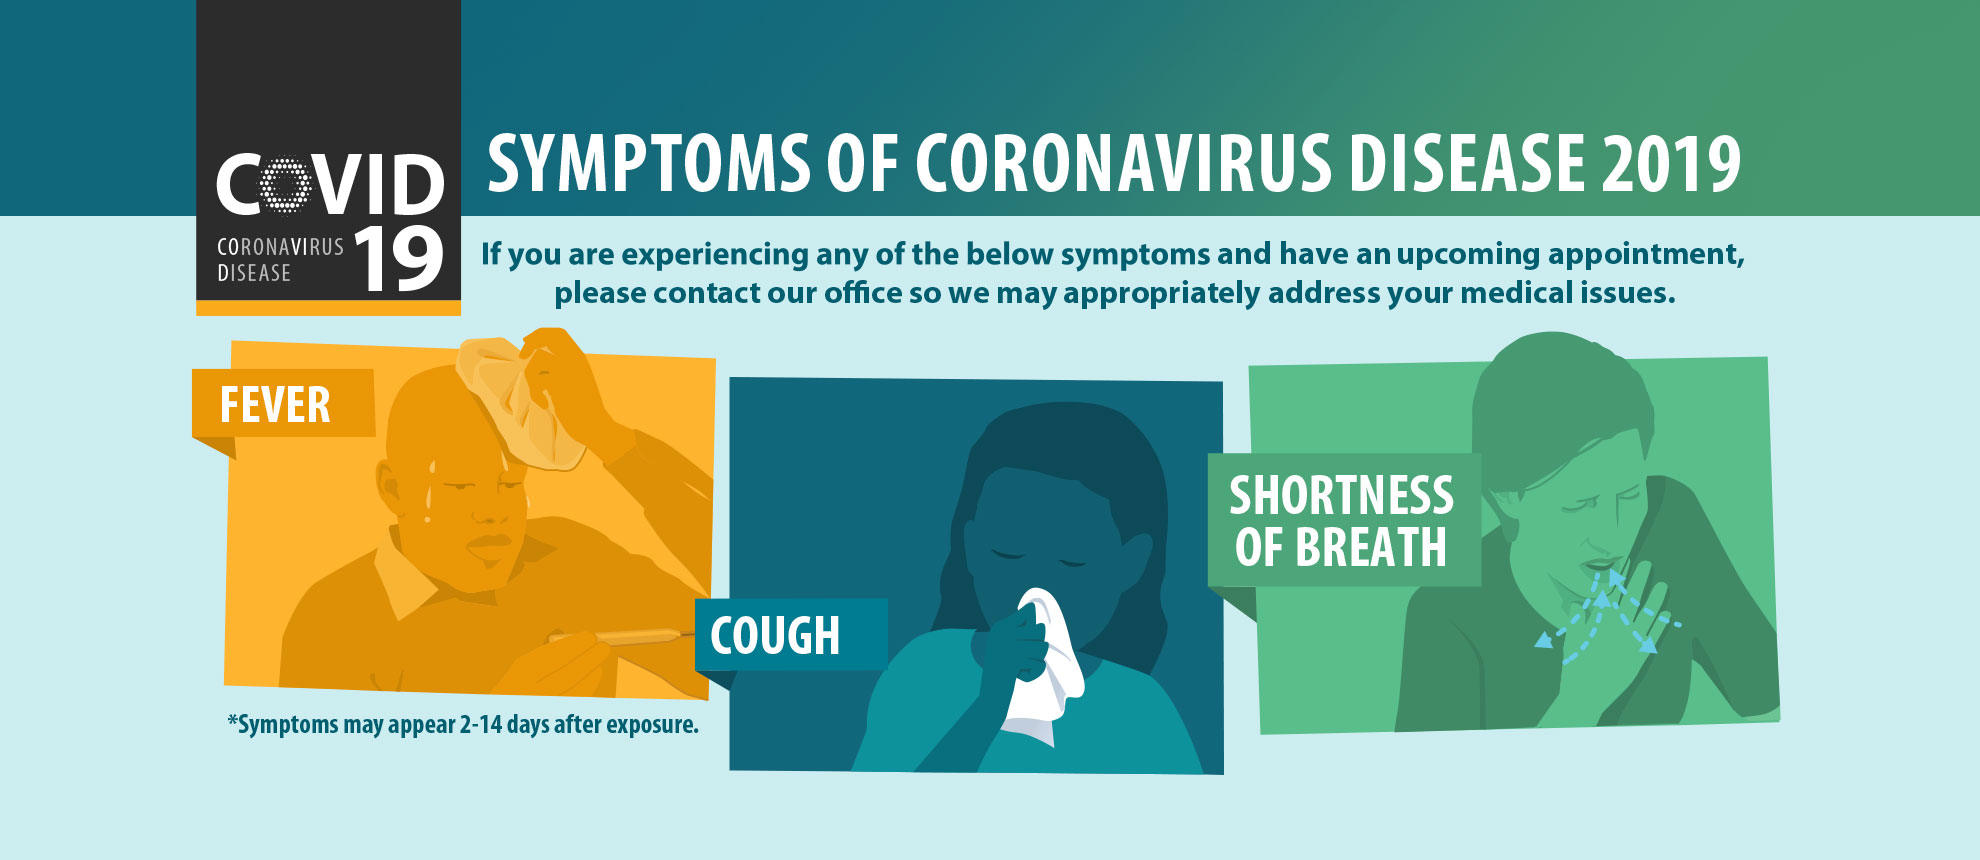 SYMPTOMS OF CORONAVIRUS DISEASE 2019